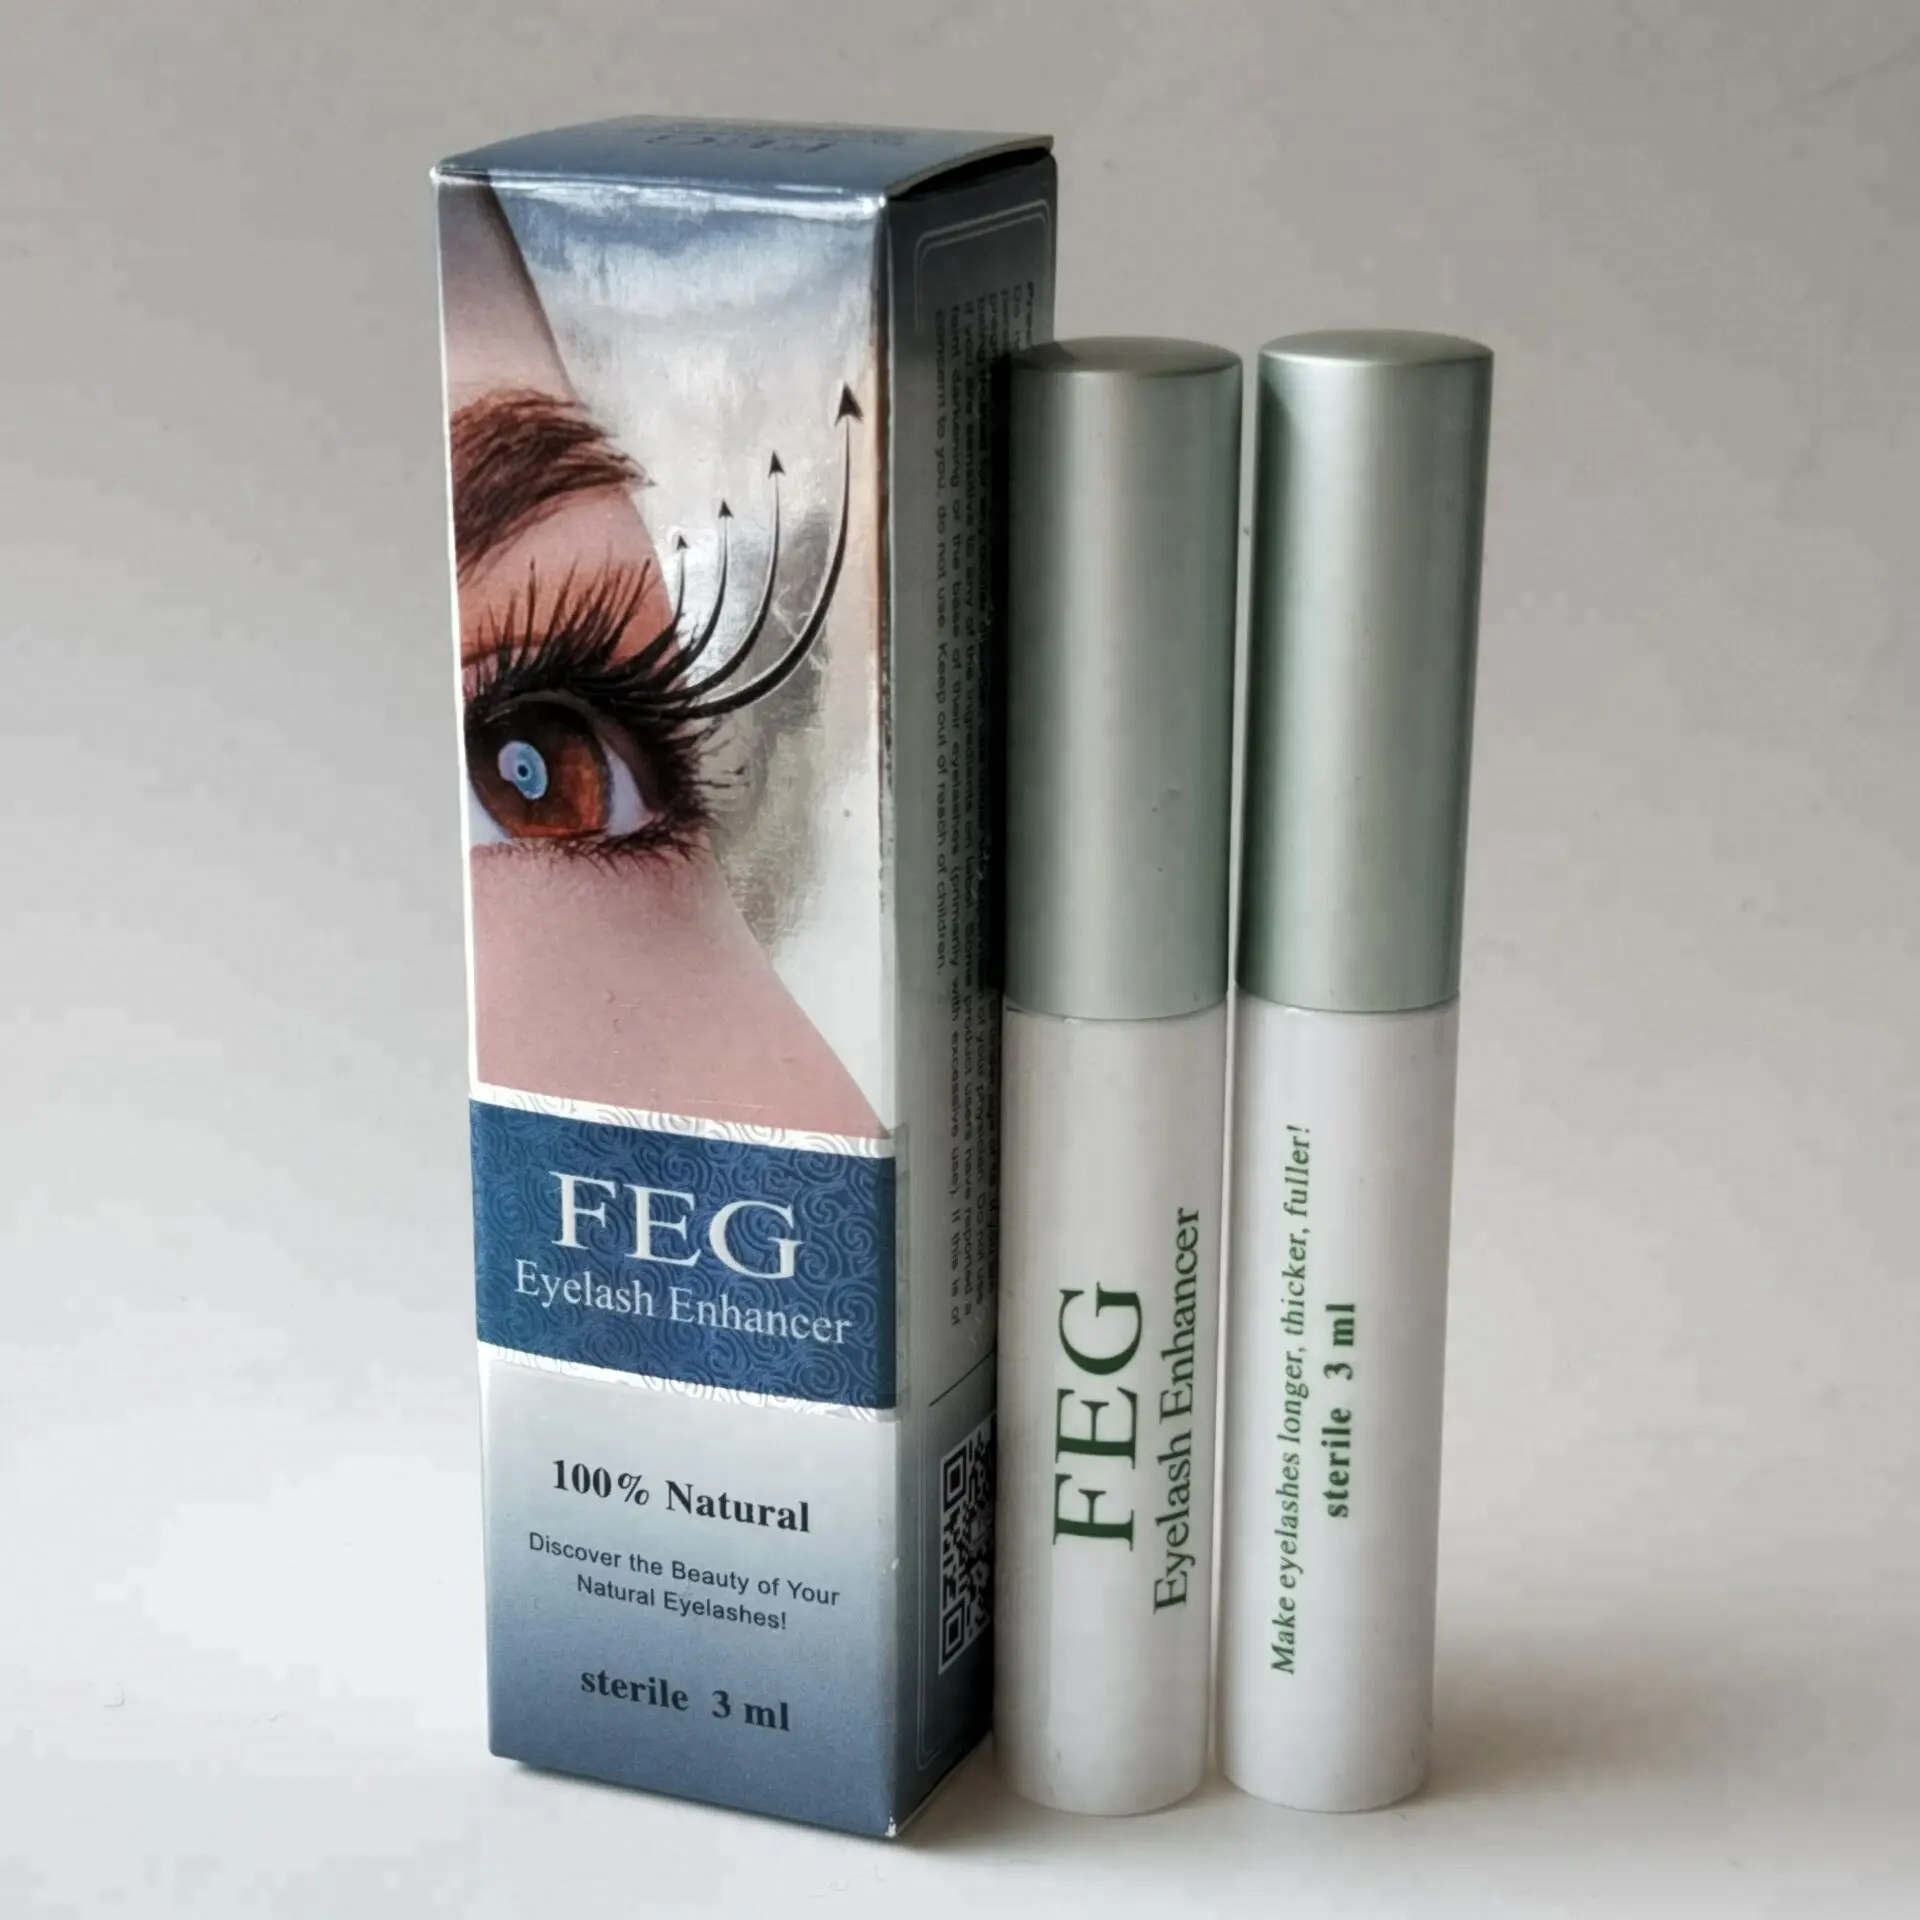 Effective eyelashes enhancer feg eye lash enhancer serum